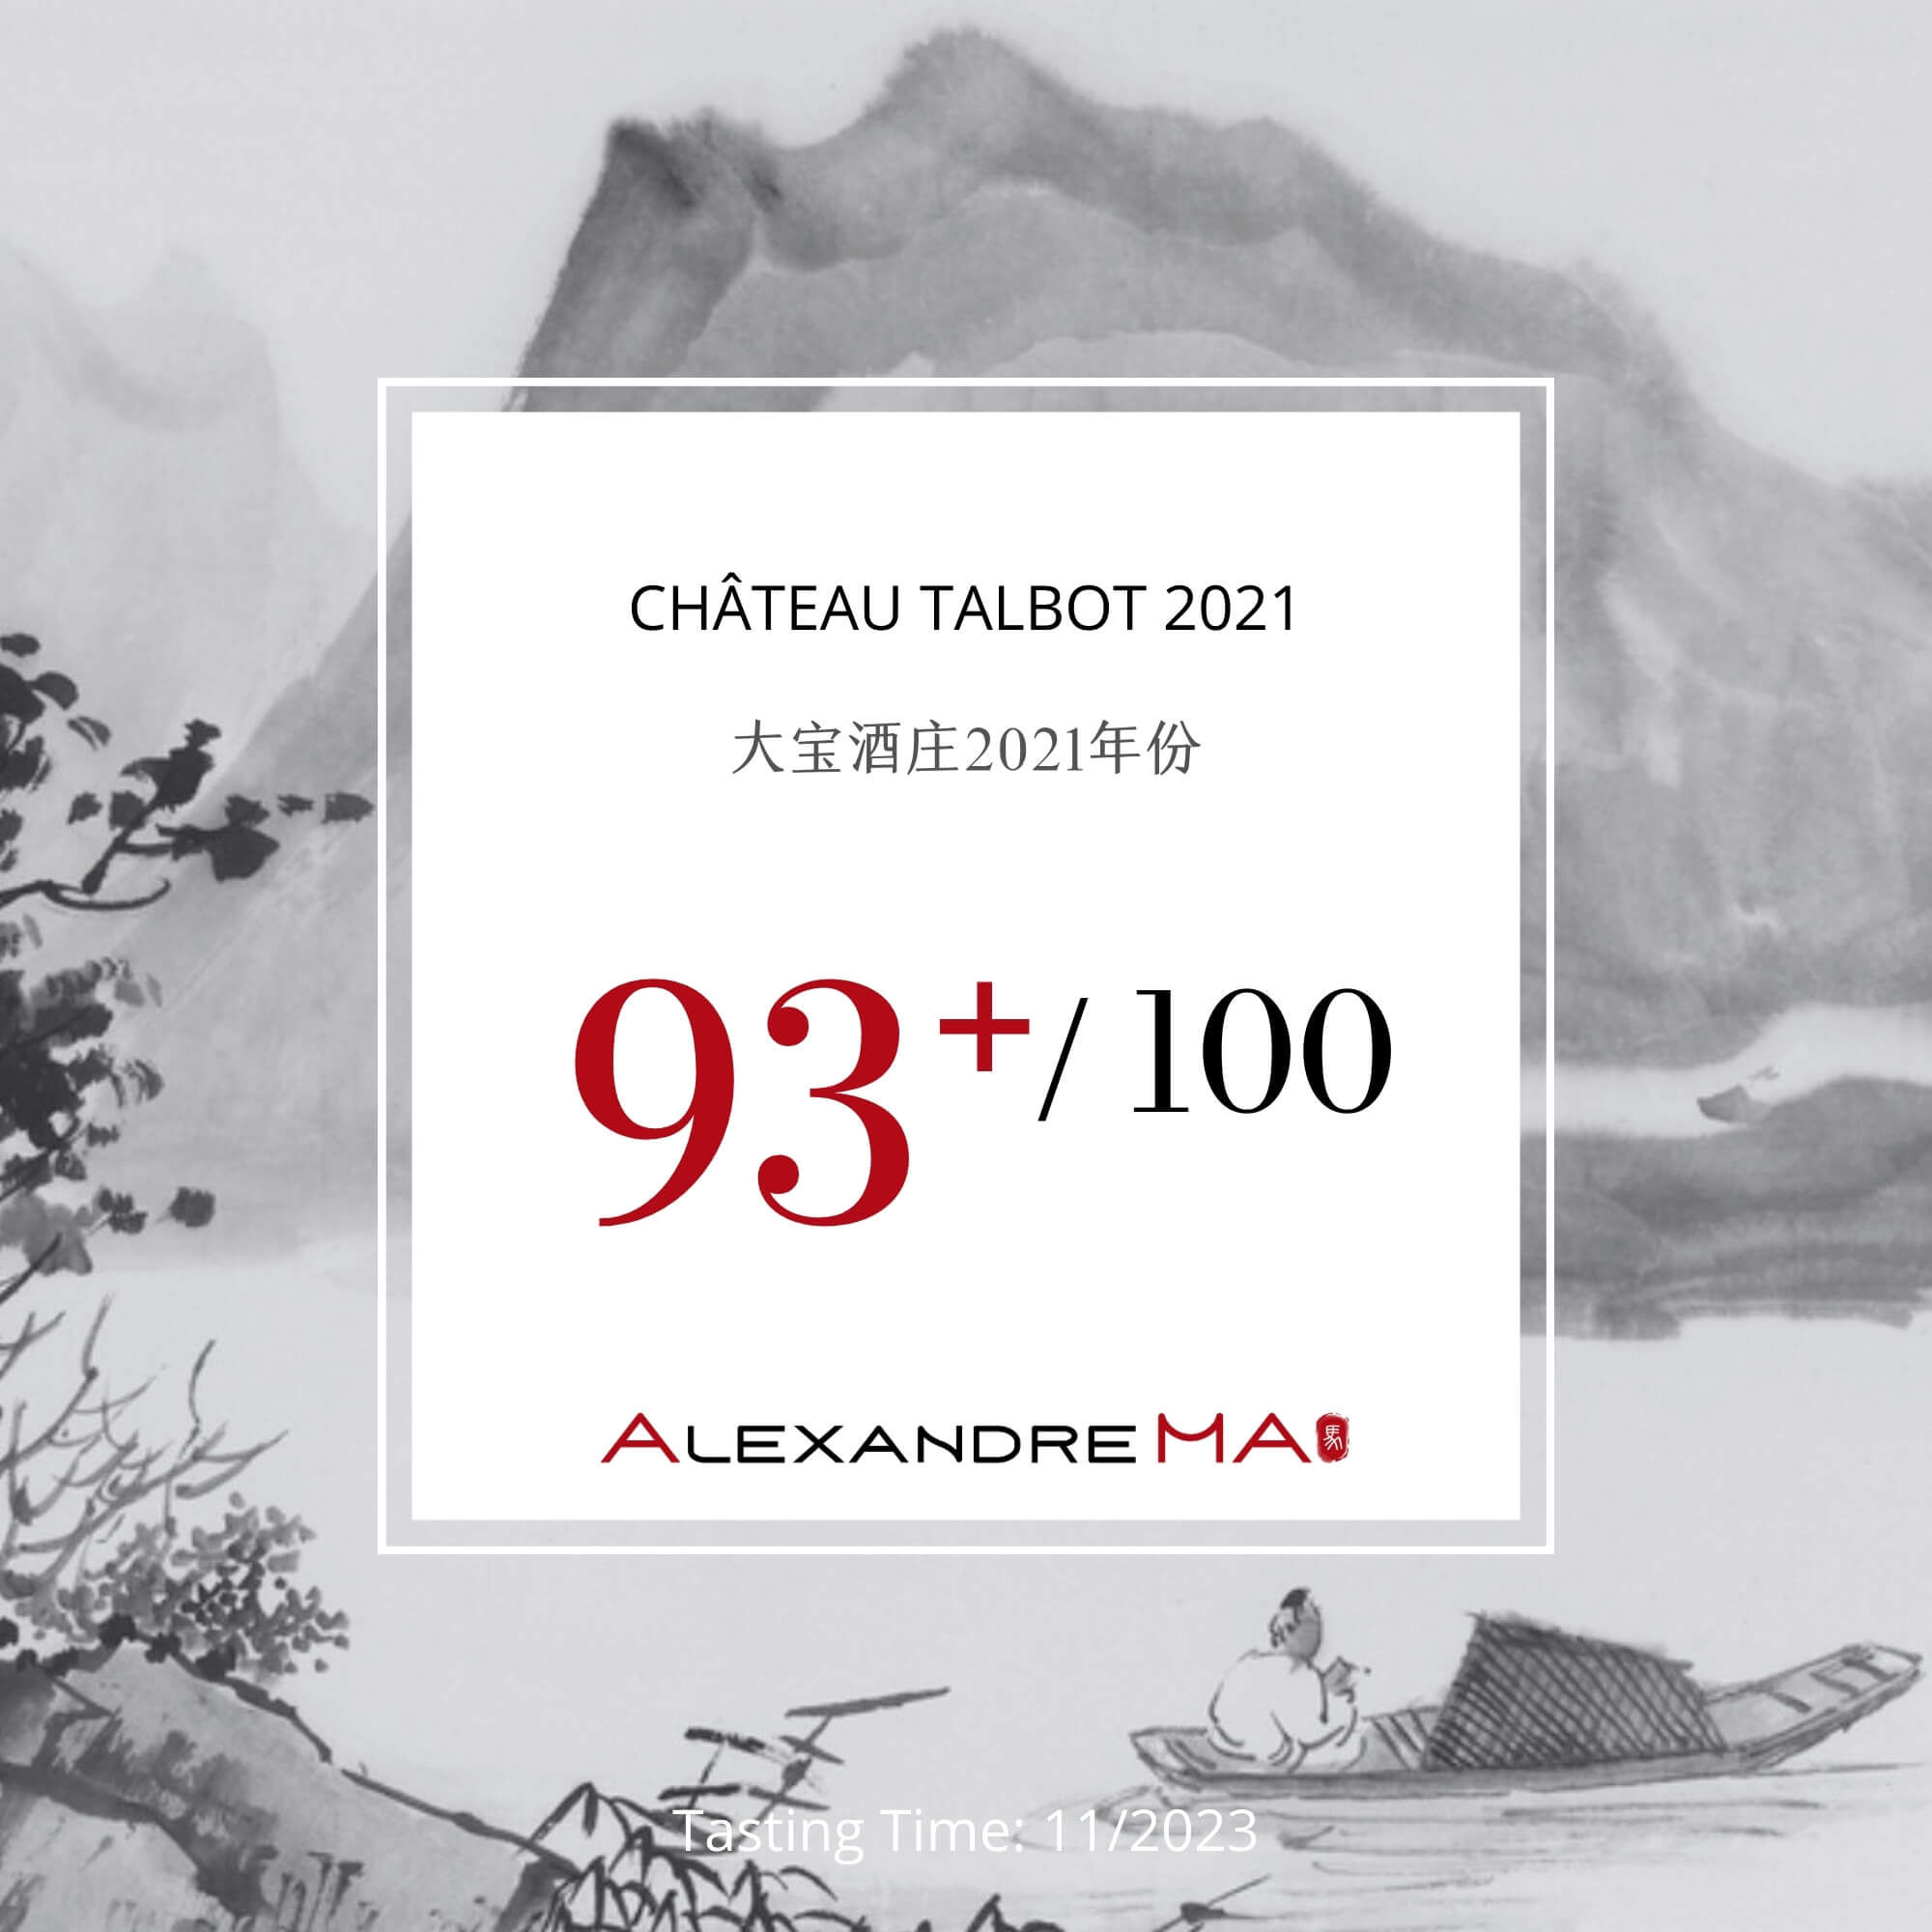 Château Talbot 2021 大宝酒庄 - Alexandre Ma